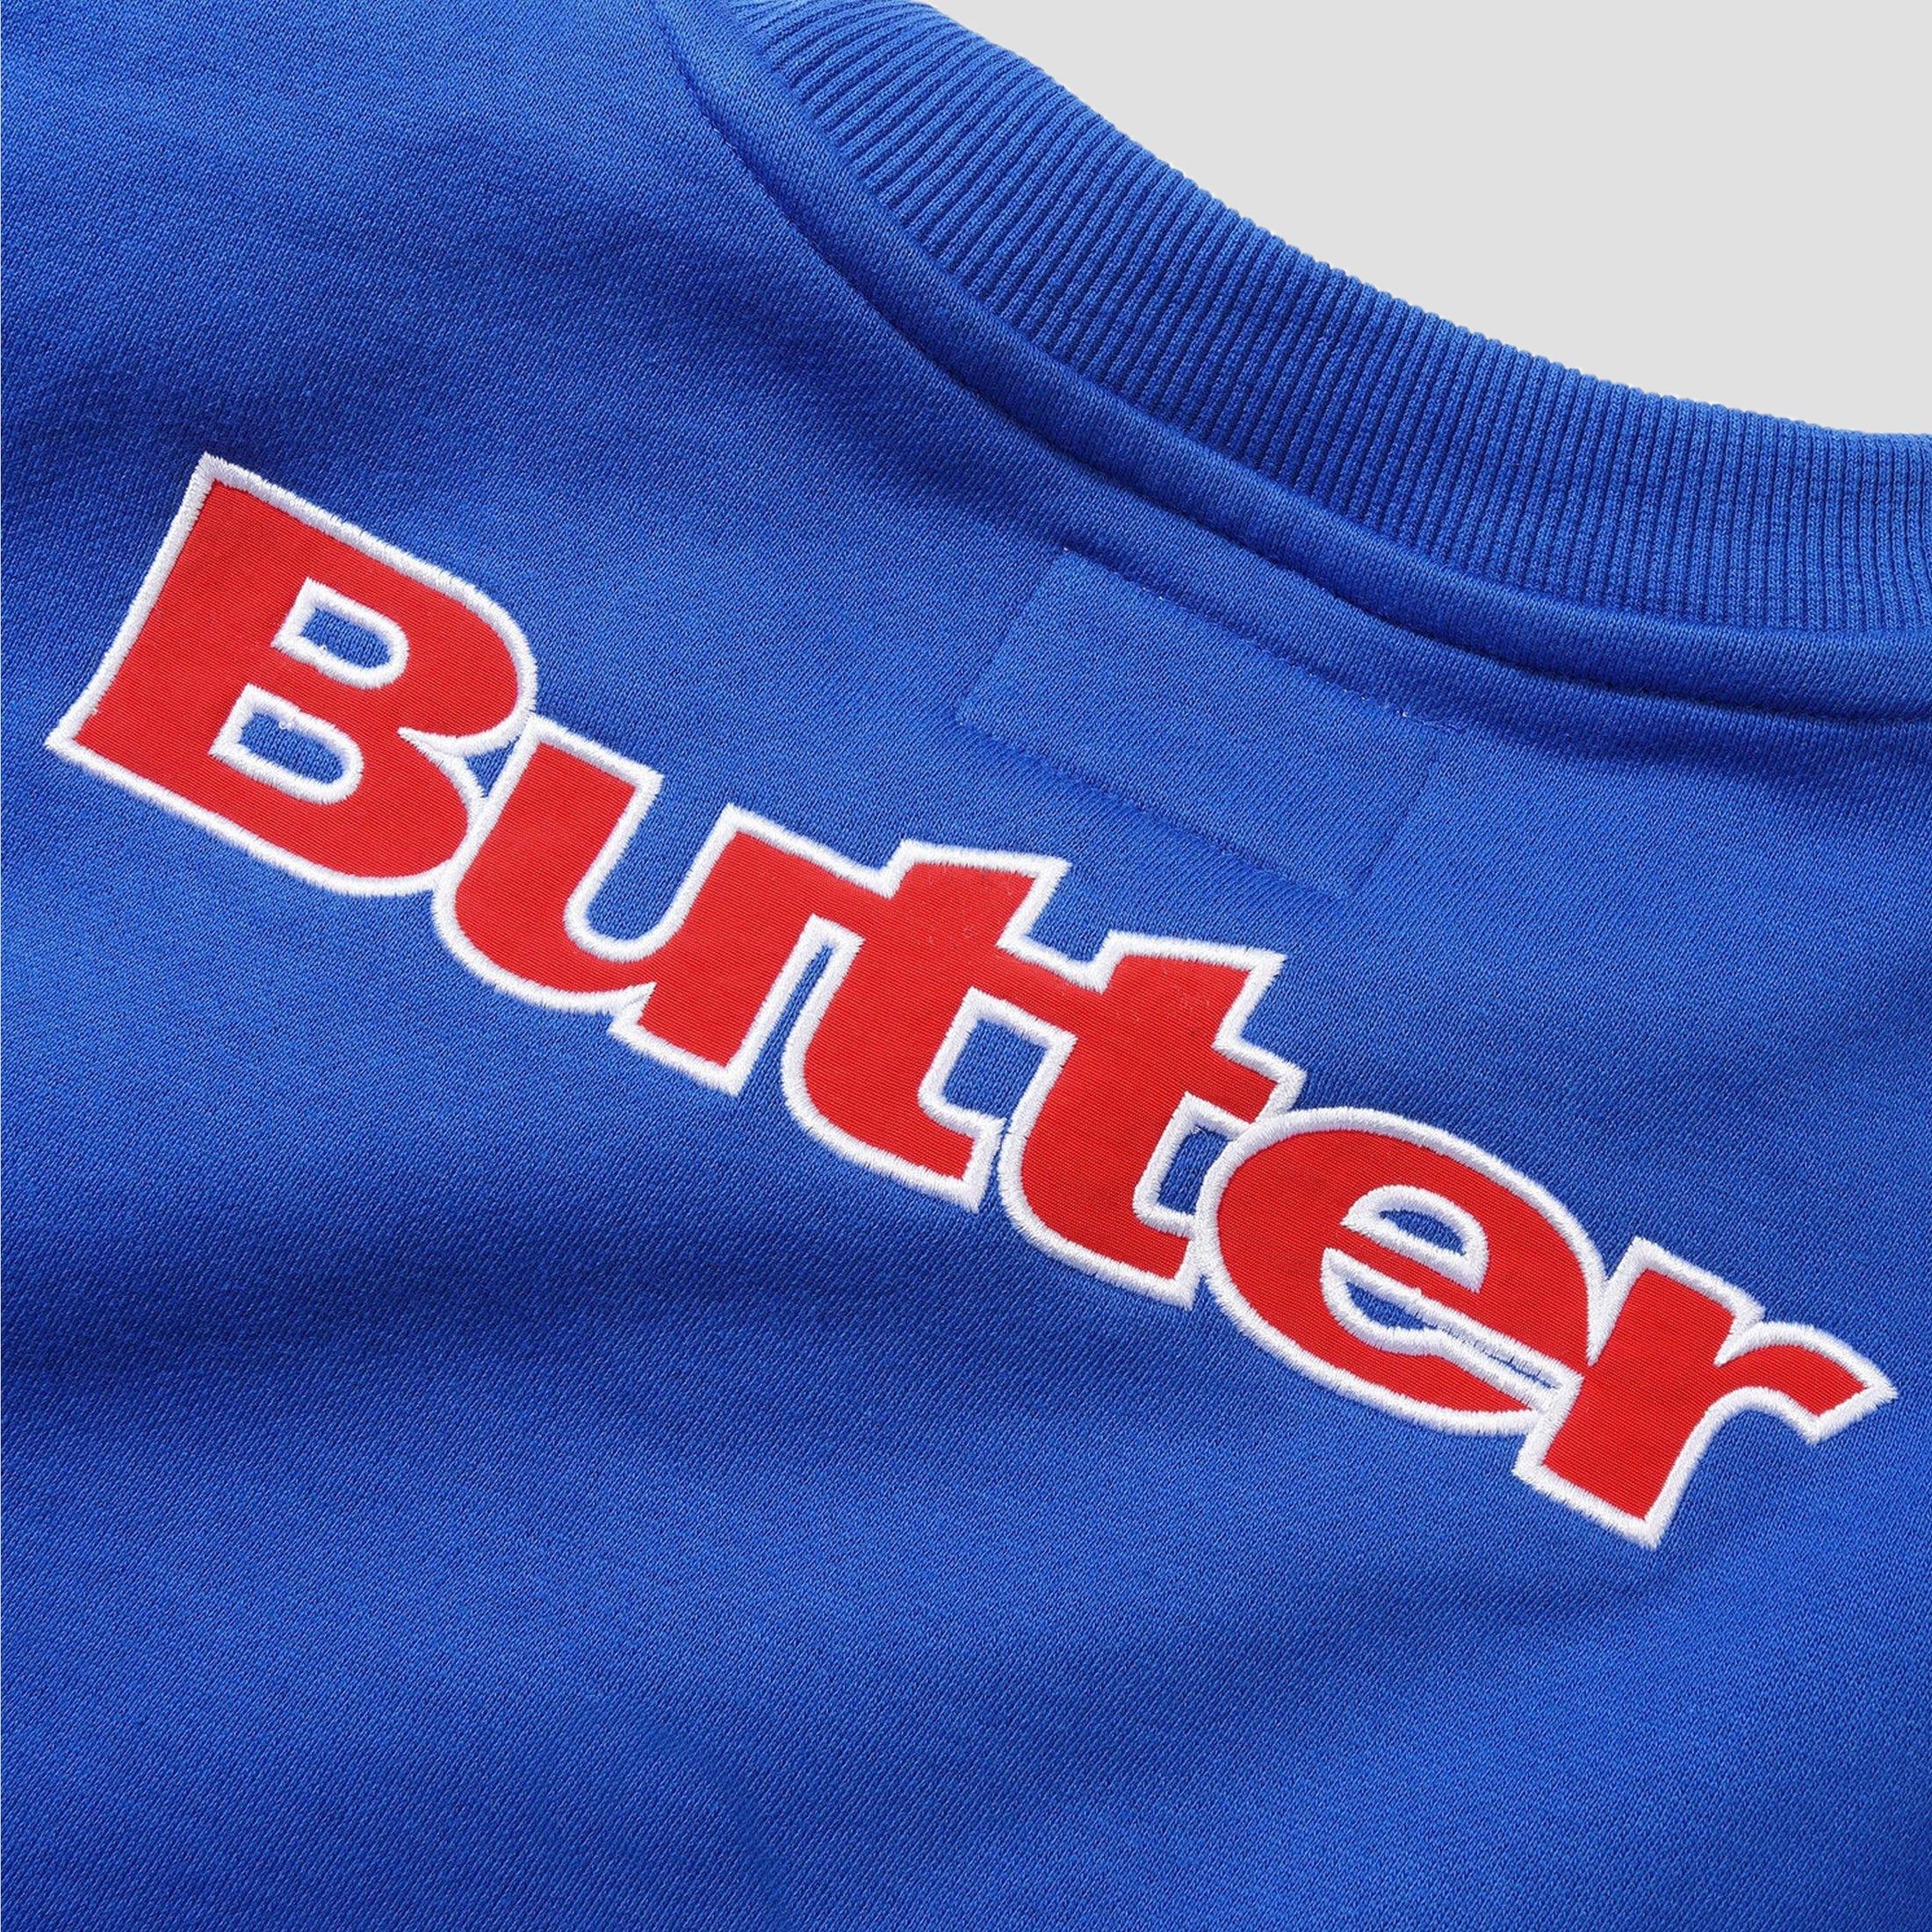 Butter Goods x Disney Fantasia Crew Royal Blue